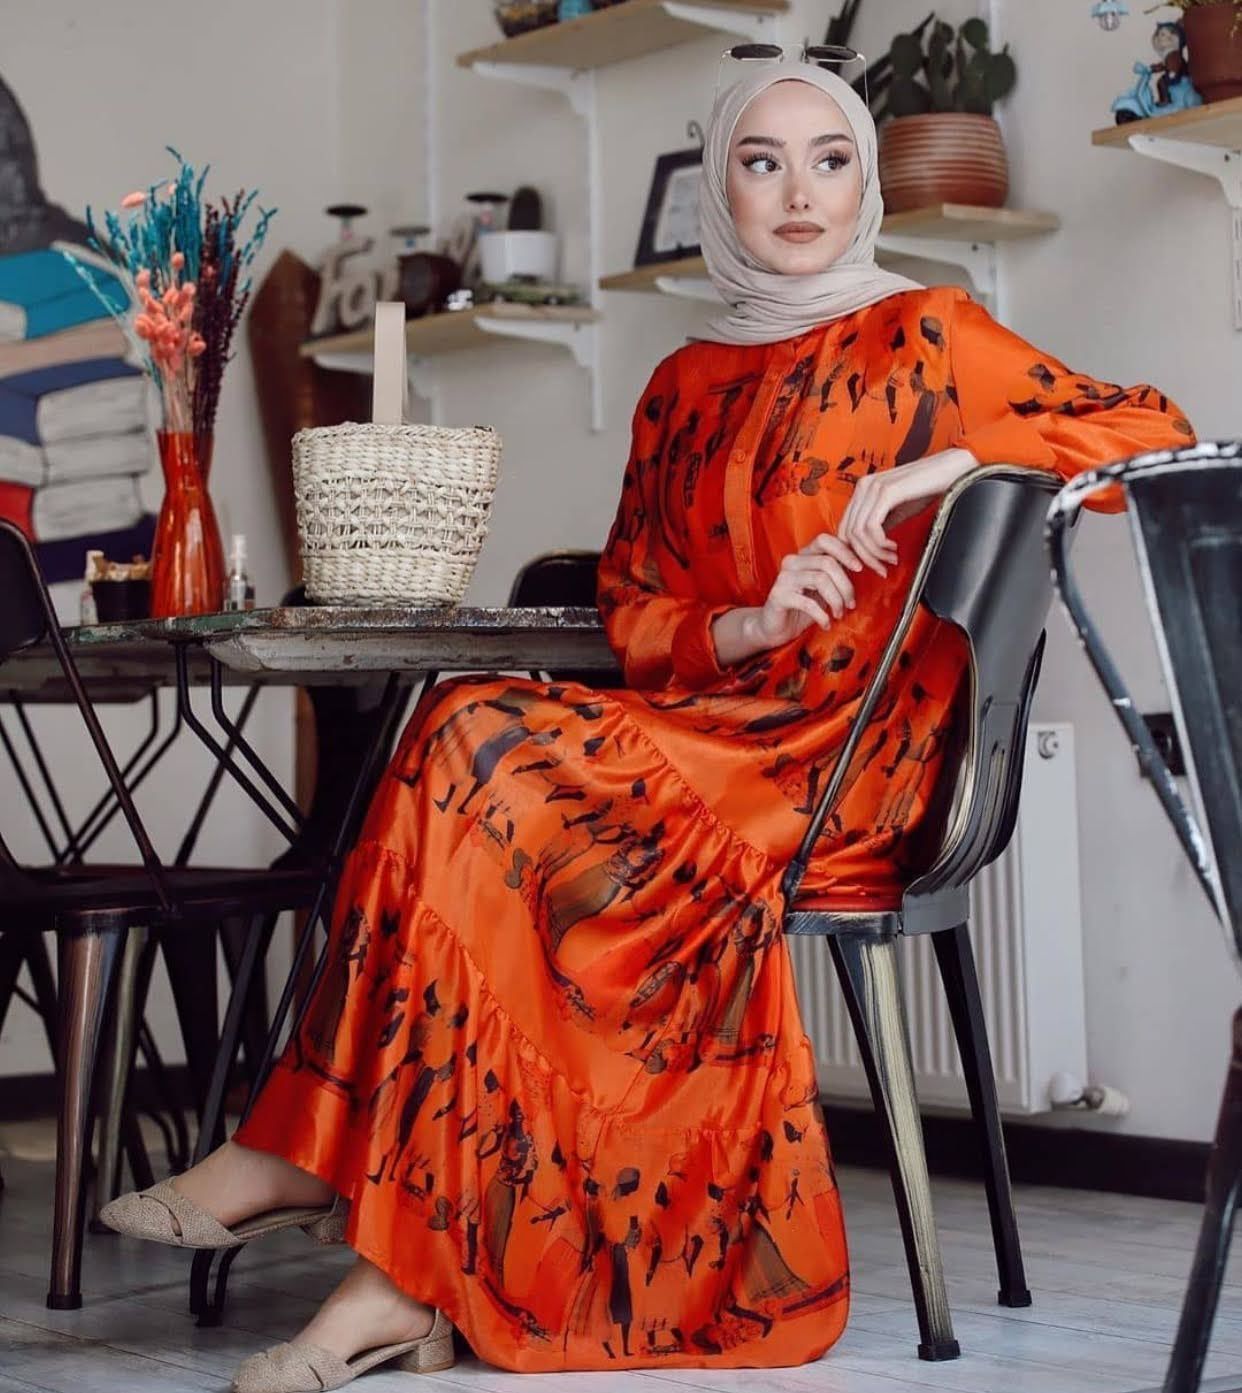 16 style Hijab robe ideas